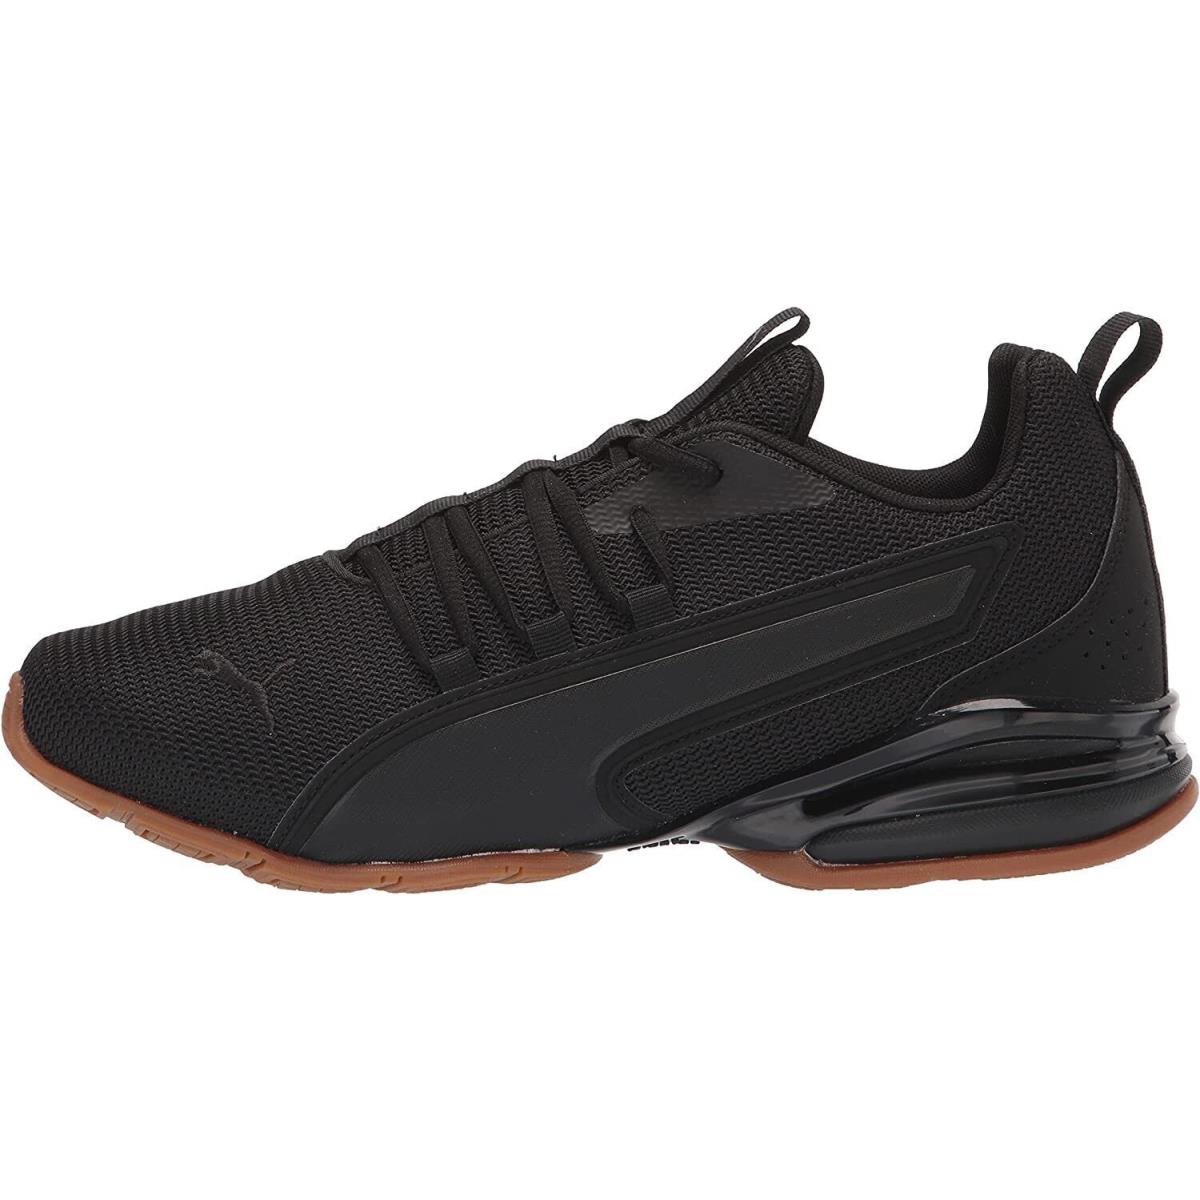 Puma Axelion Nxt Black / Gum Men`s Athletic Training Sneakers 19565606 - Black